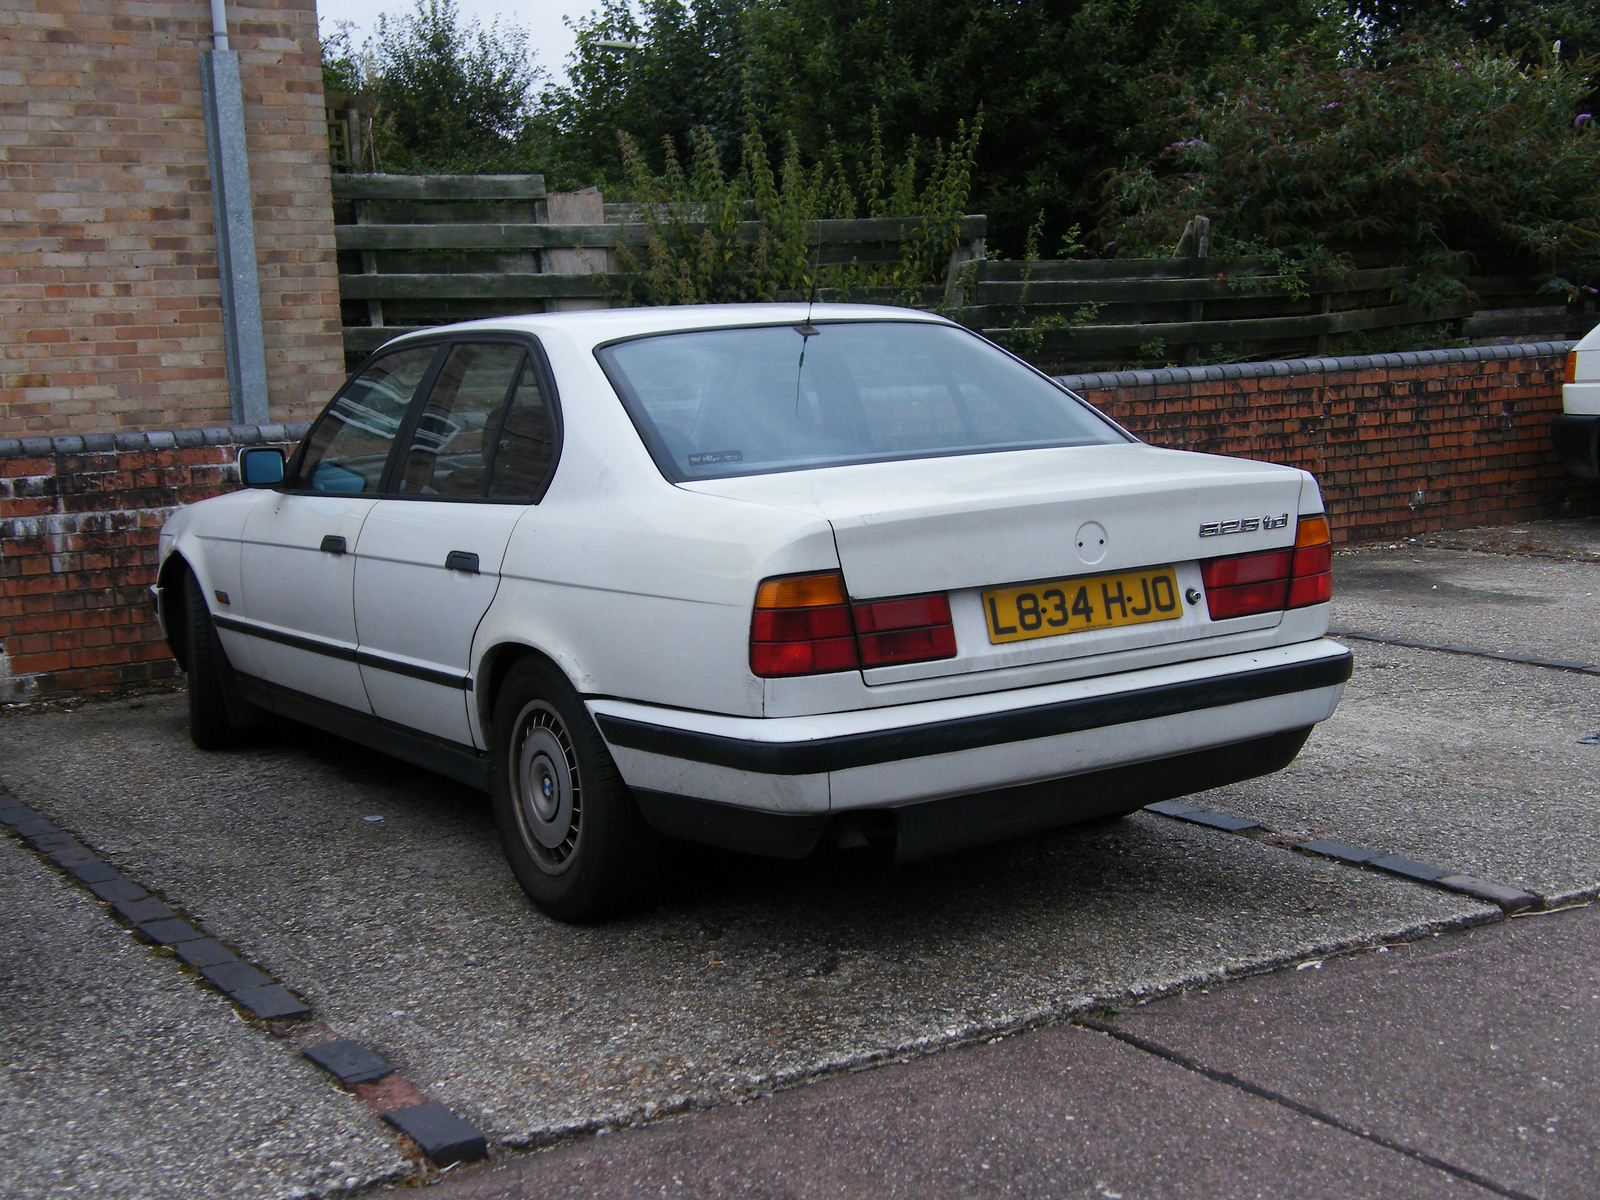 1993 BMW 525td | Flickr - Photo Sharing!